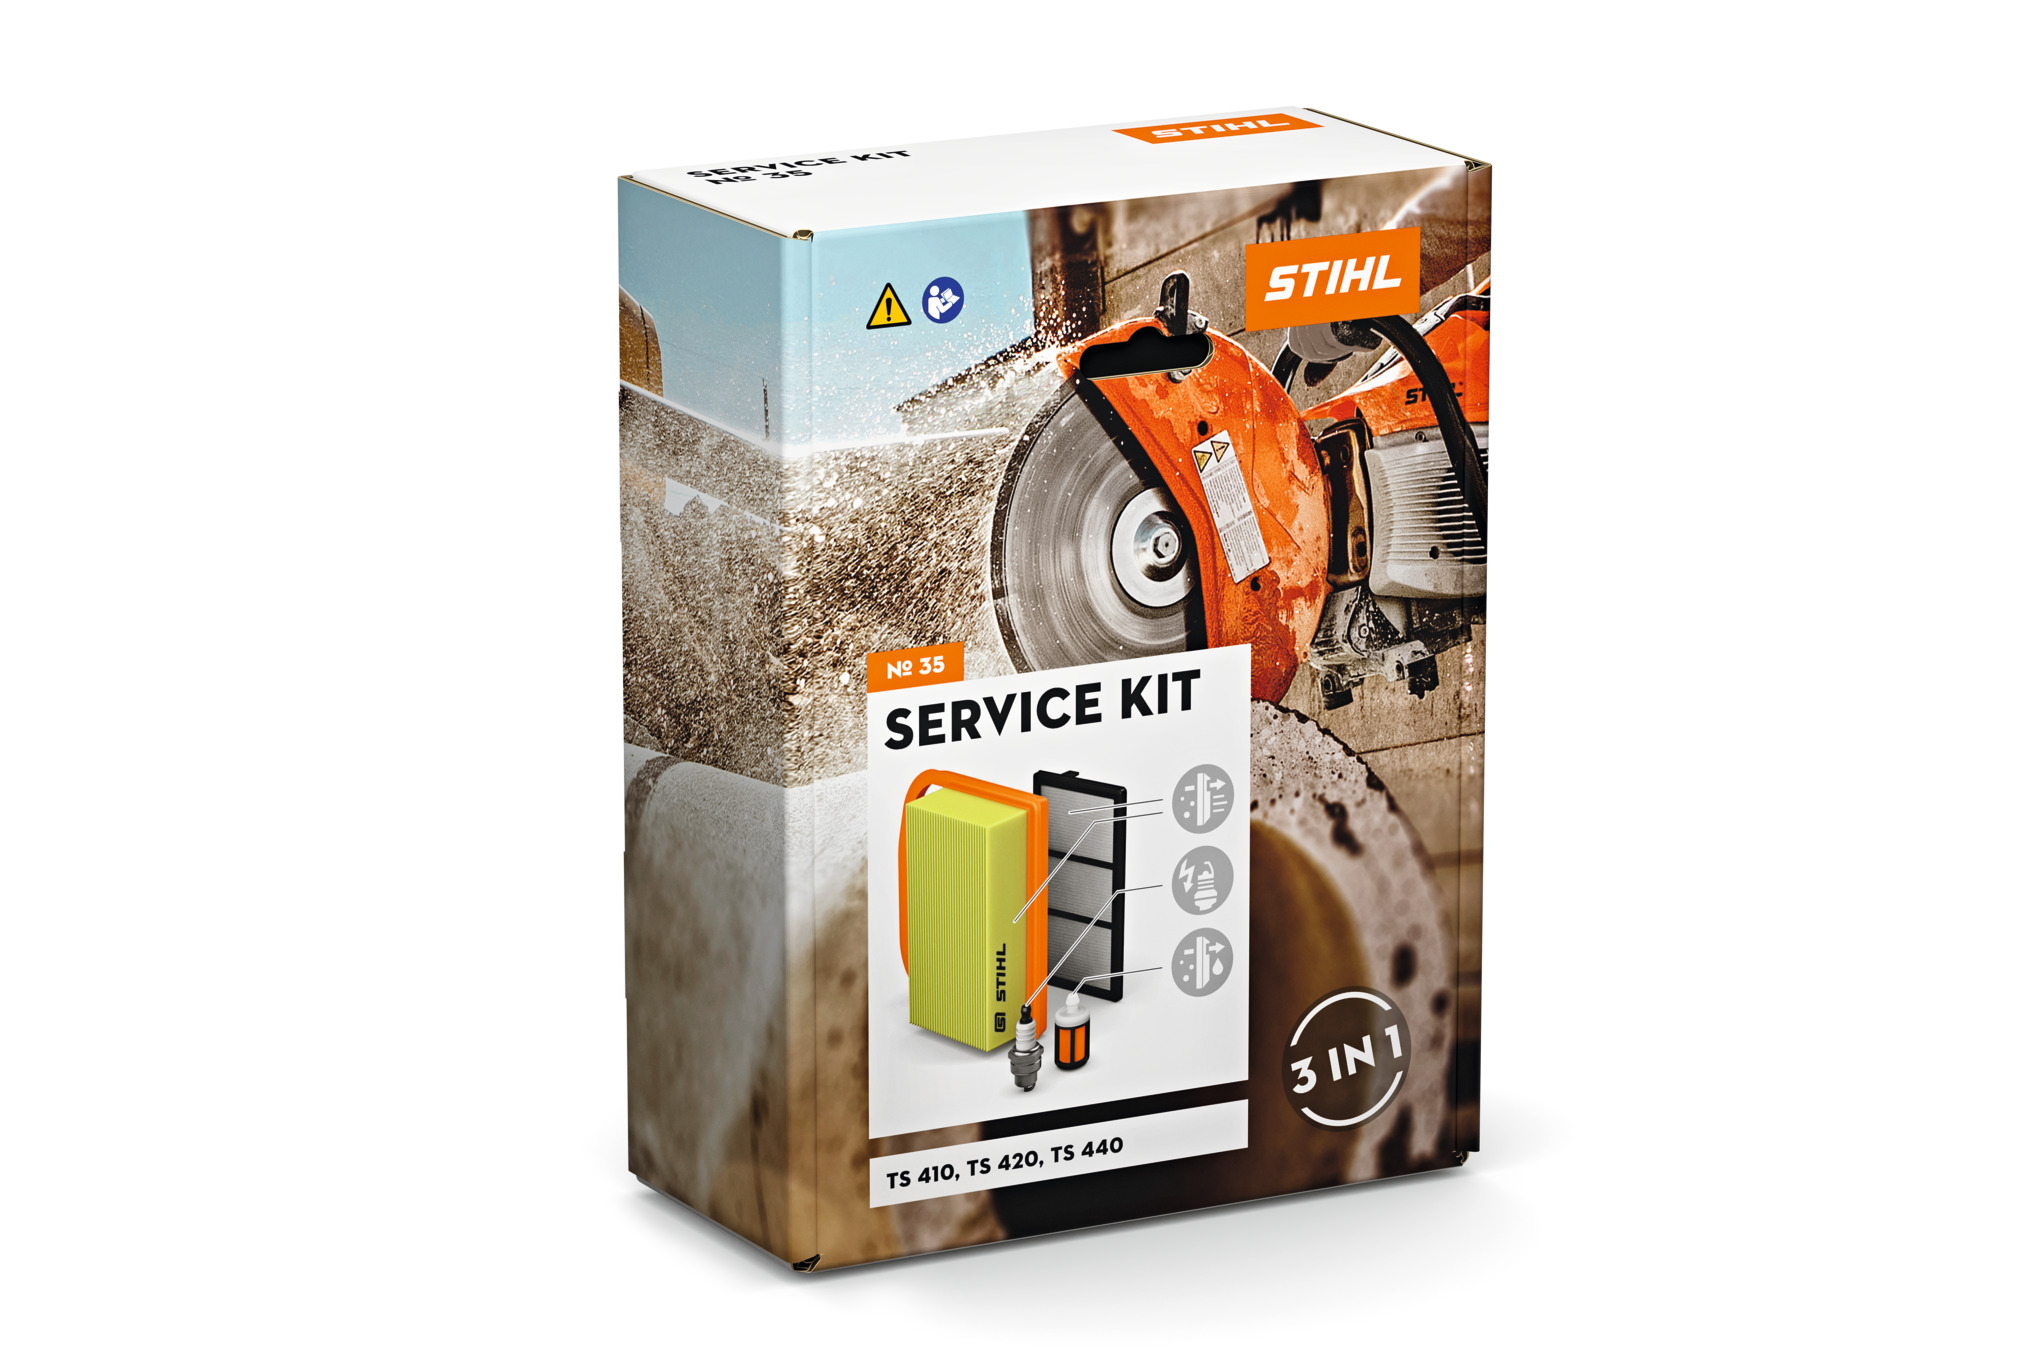 Service Kit 35 :TS 410, 420